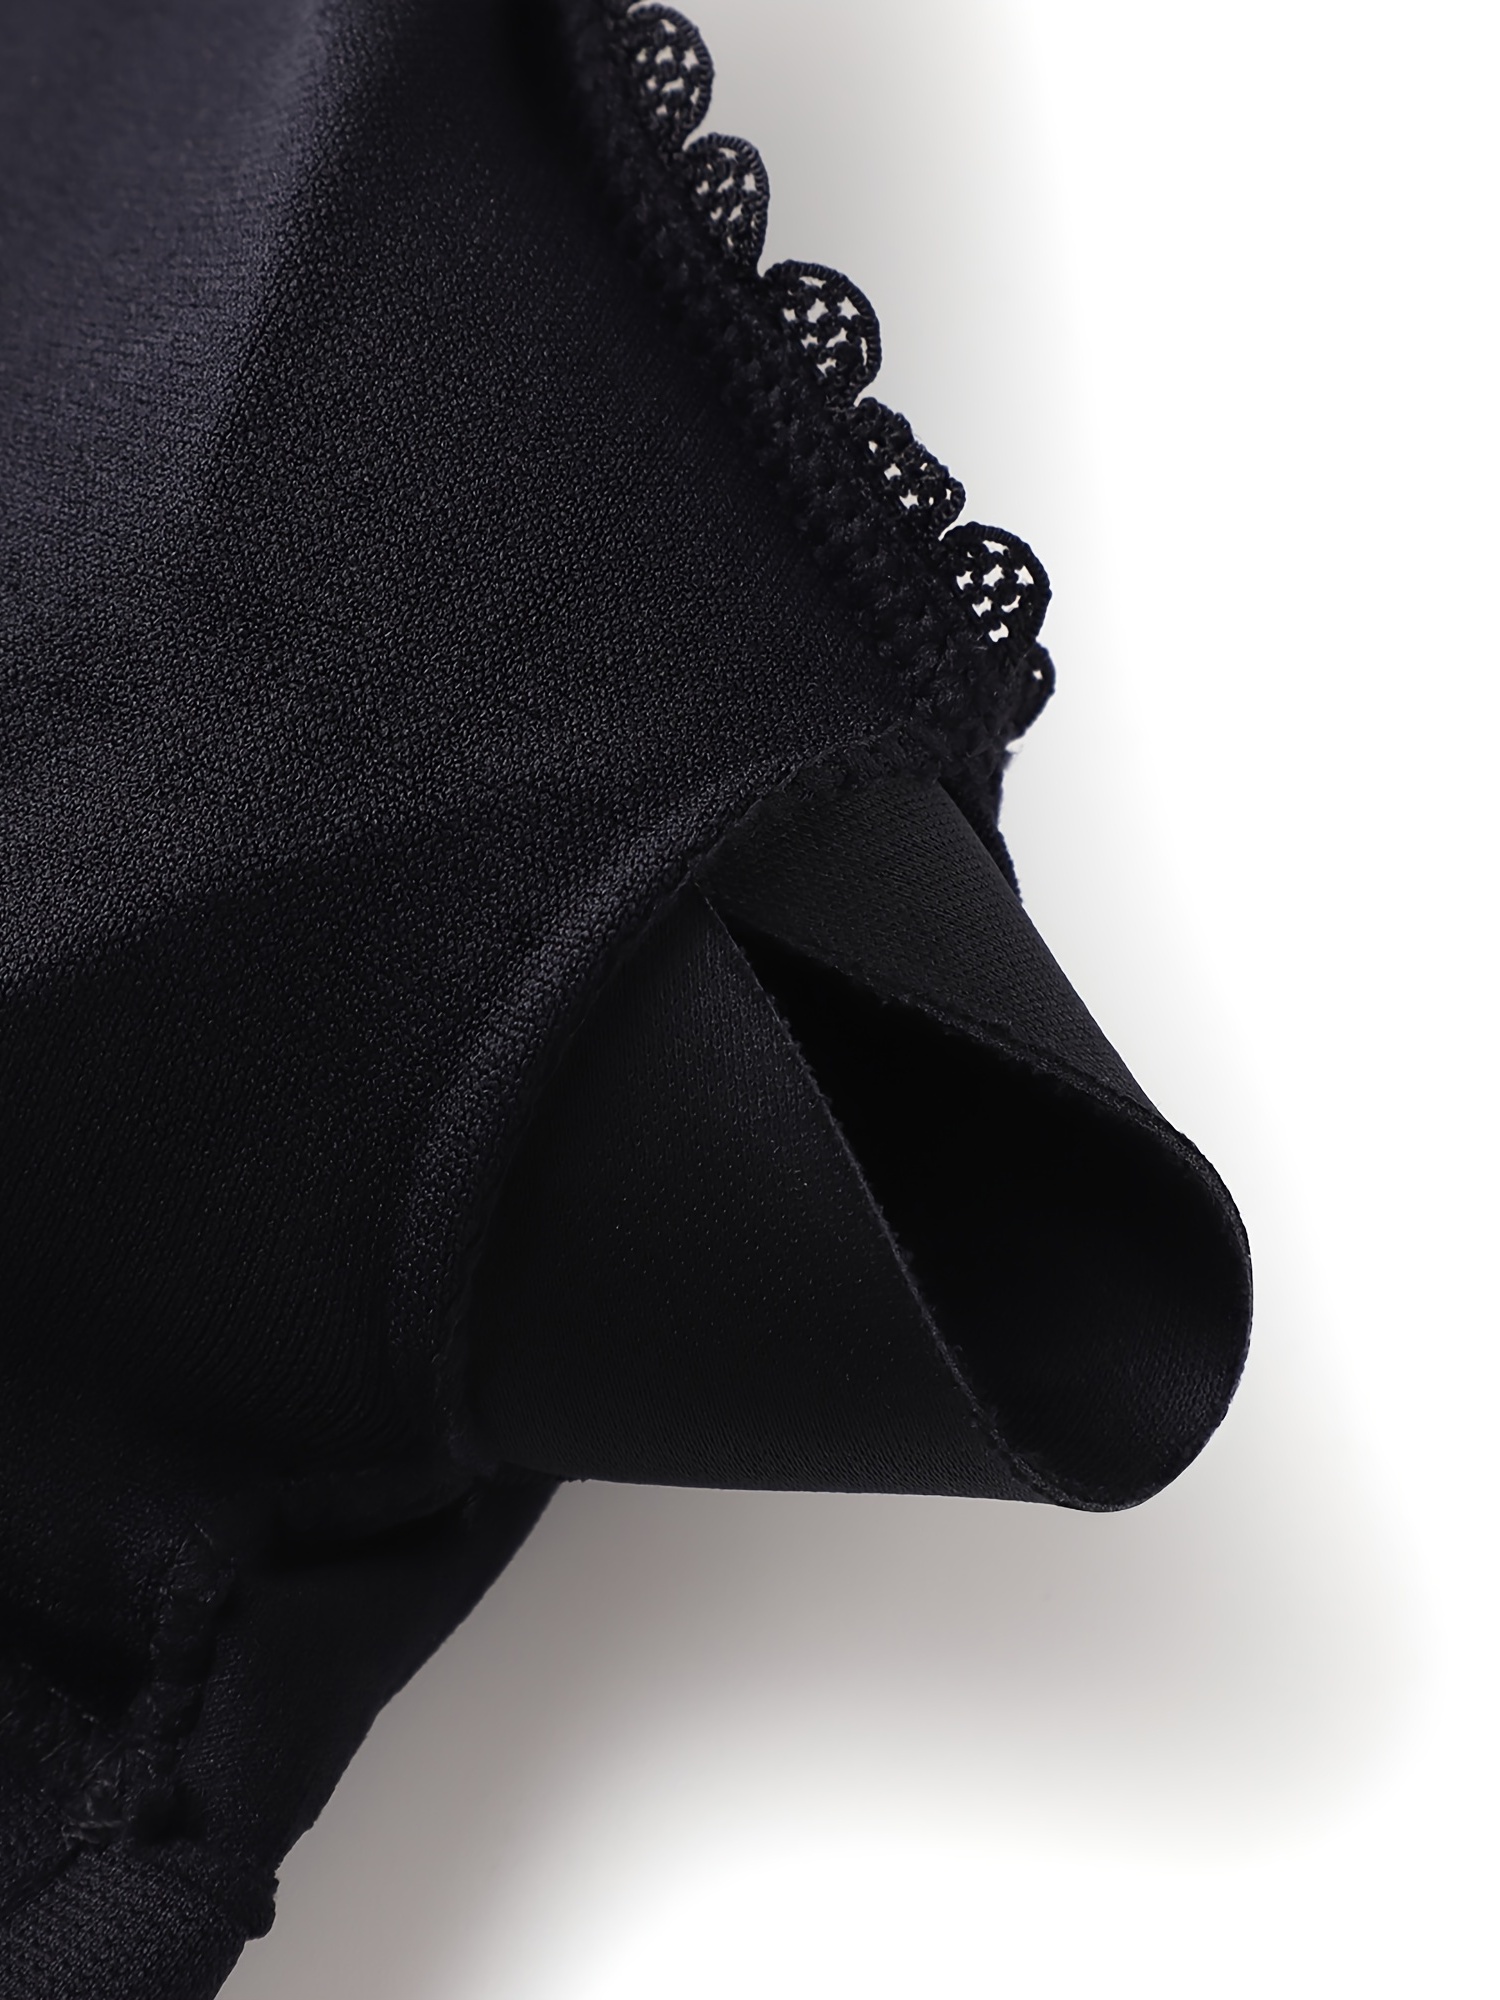 Lismali Black Beyond Soft Wireless Plus Size Cotton Bras - Best